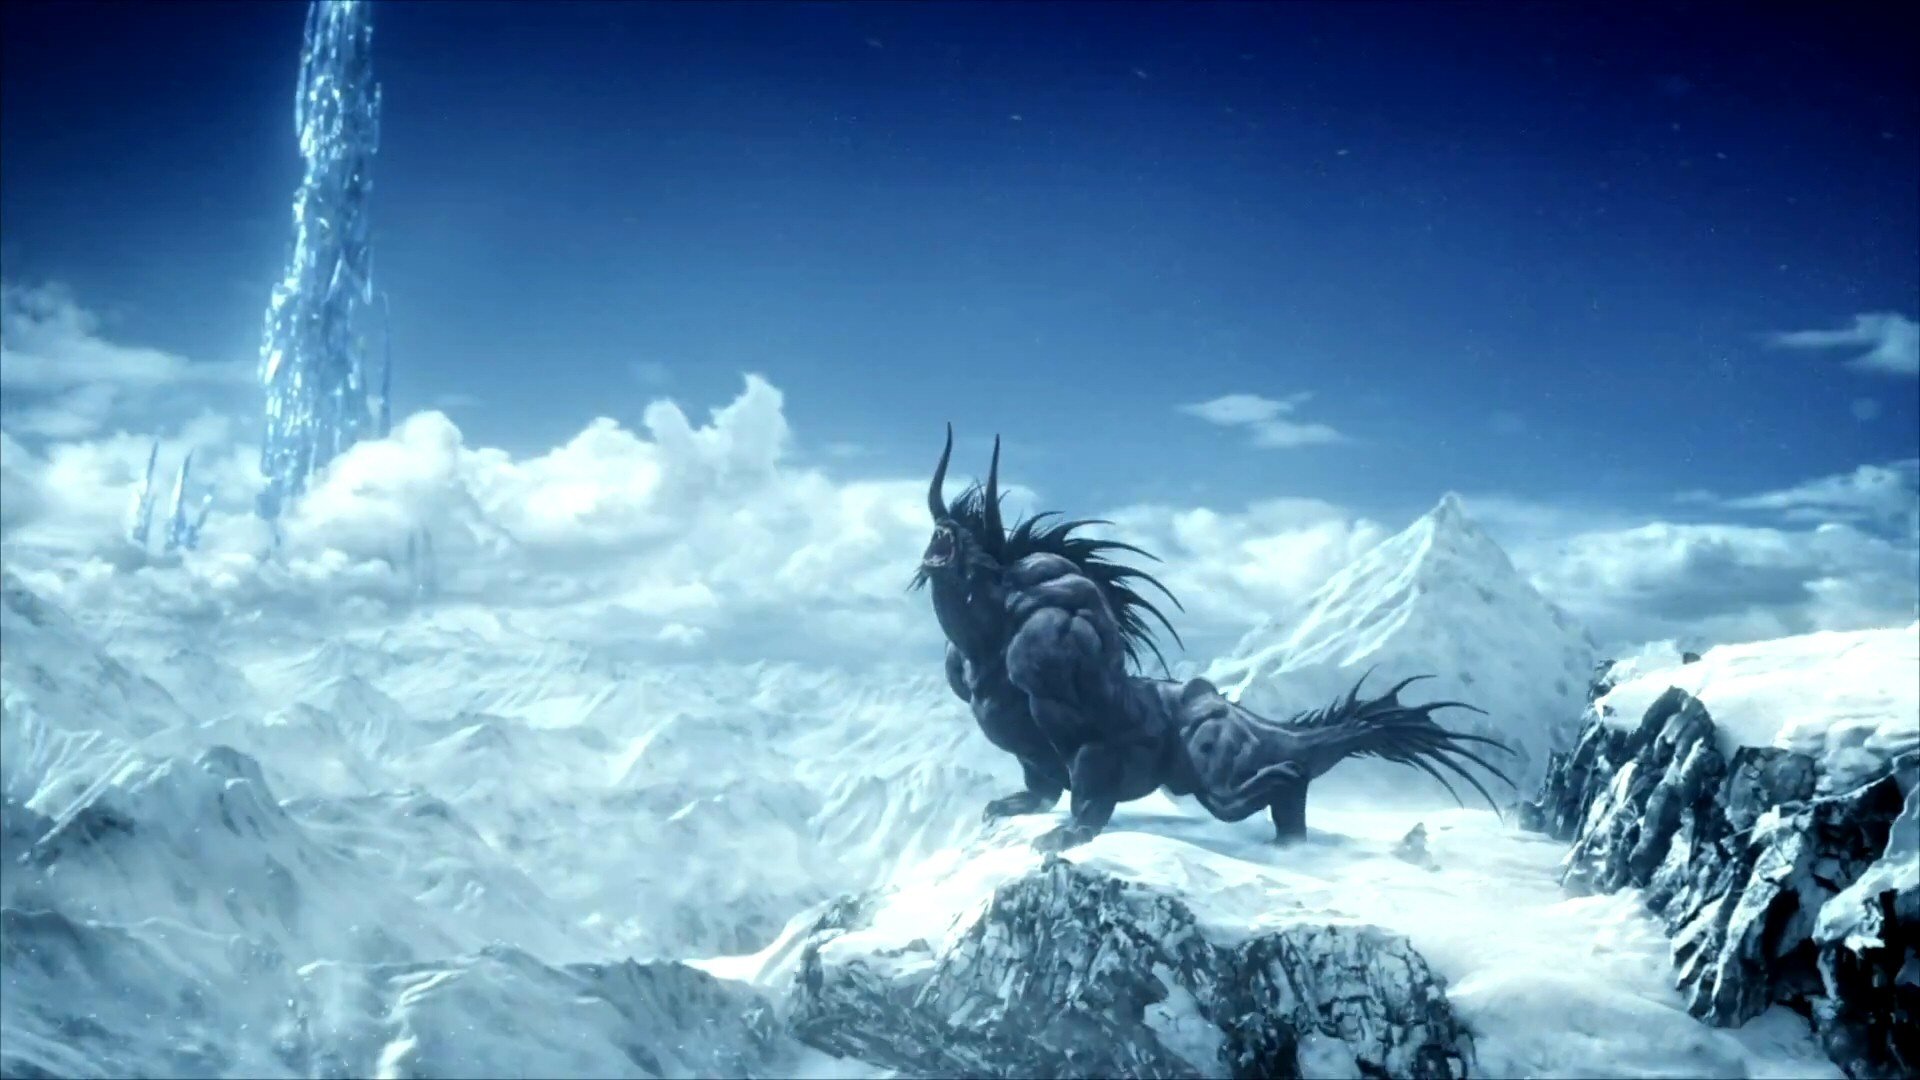 Final Fantasy XIV Heavensward Gets a Release Date Soars into the Sky